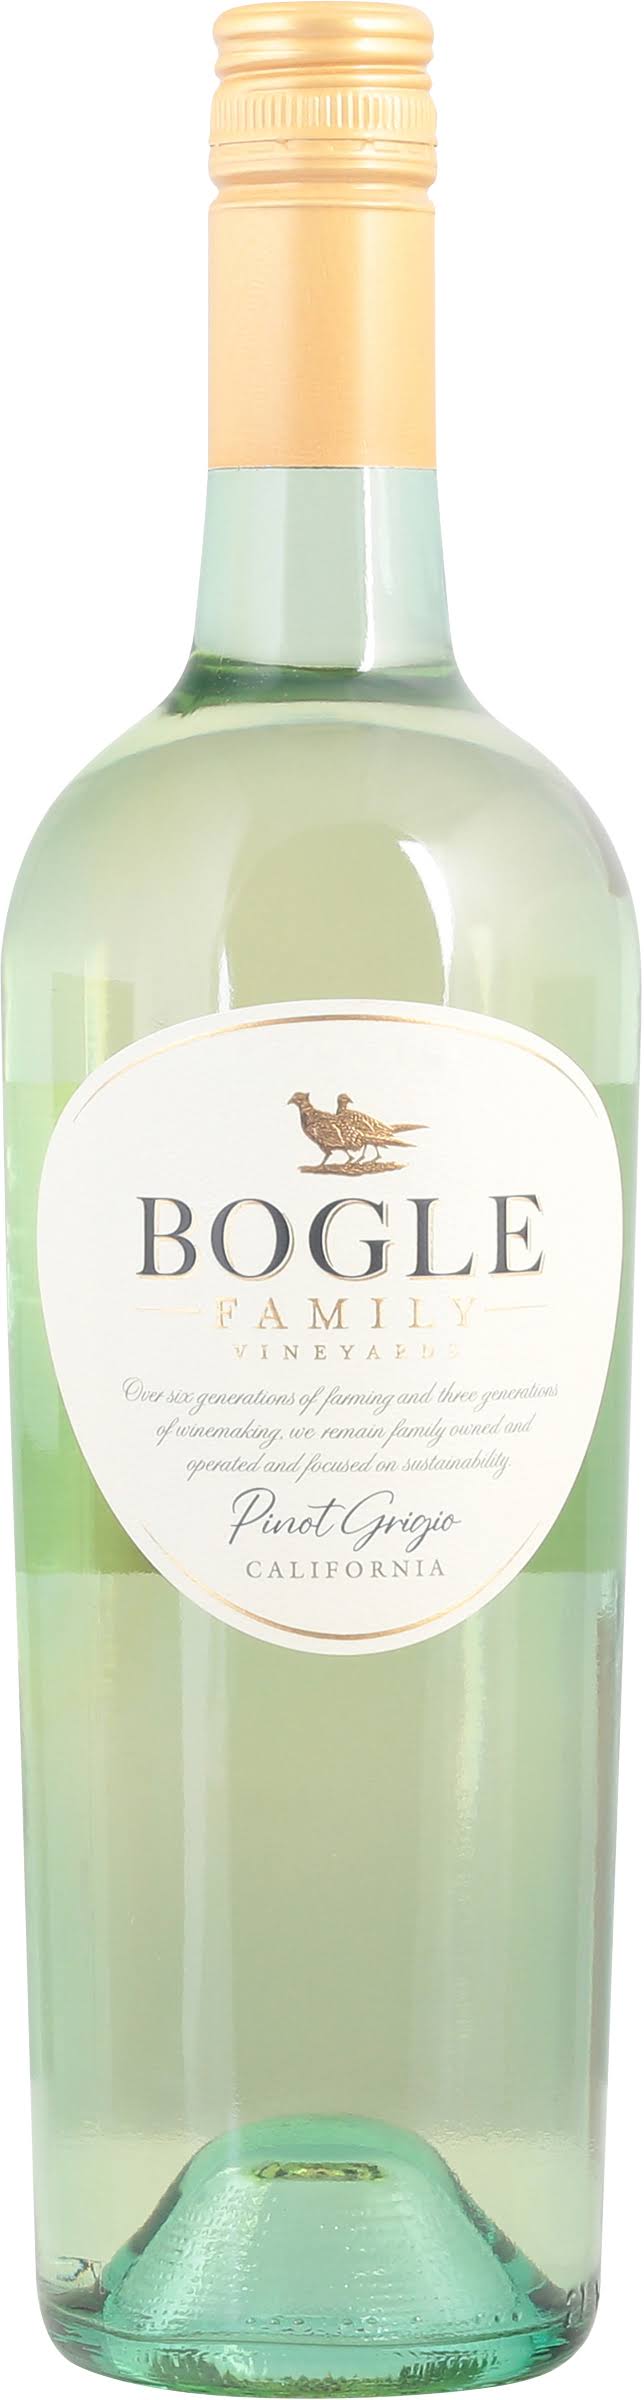 Bogle Pinot Grigio, California - 750 ml